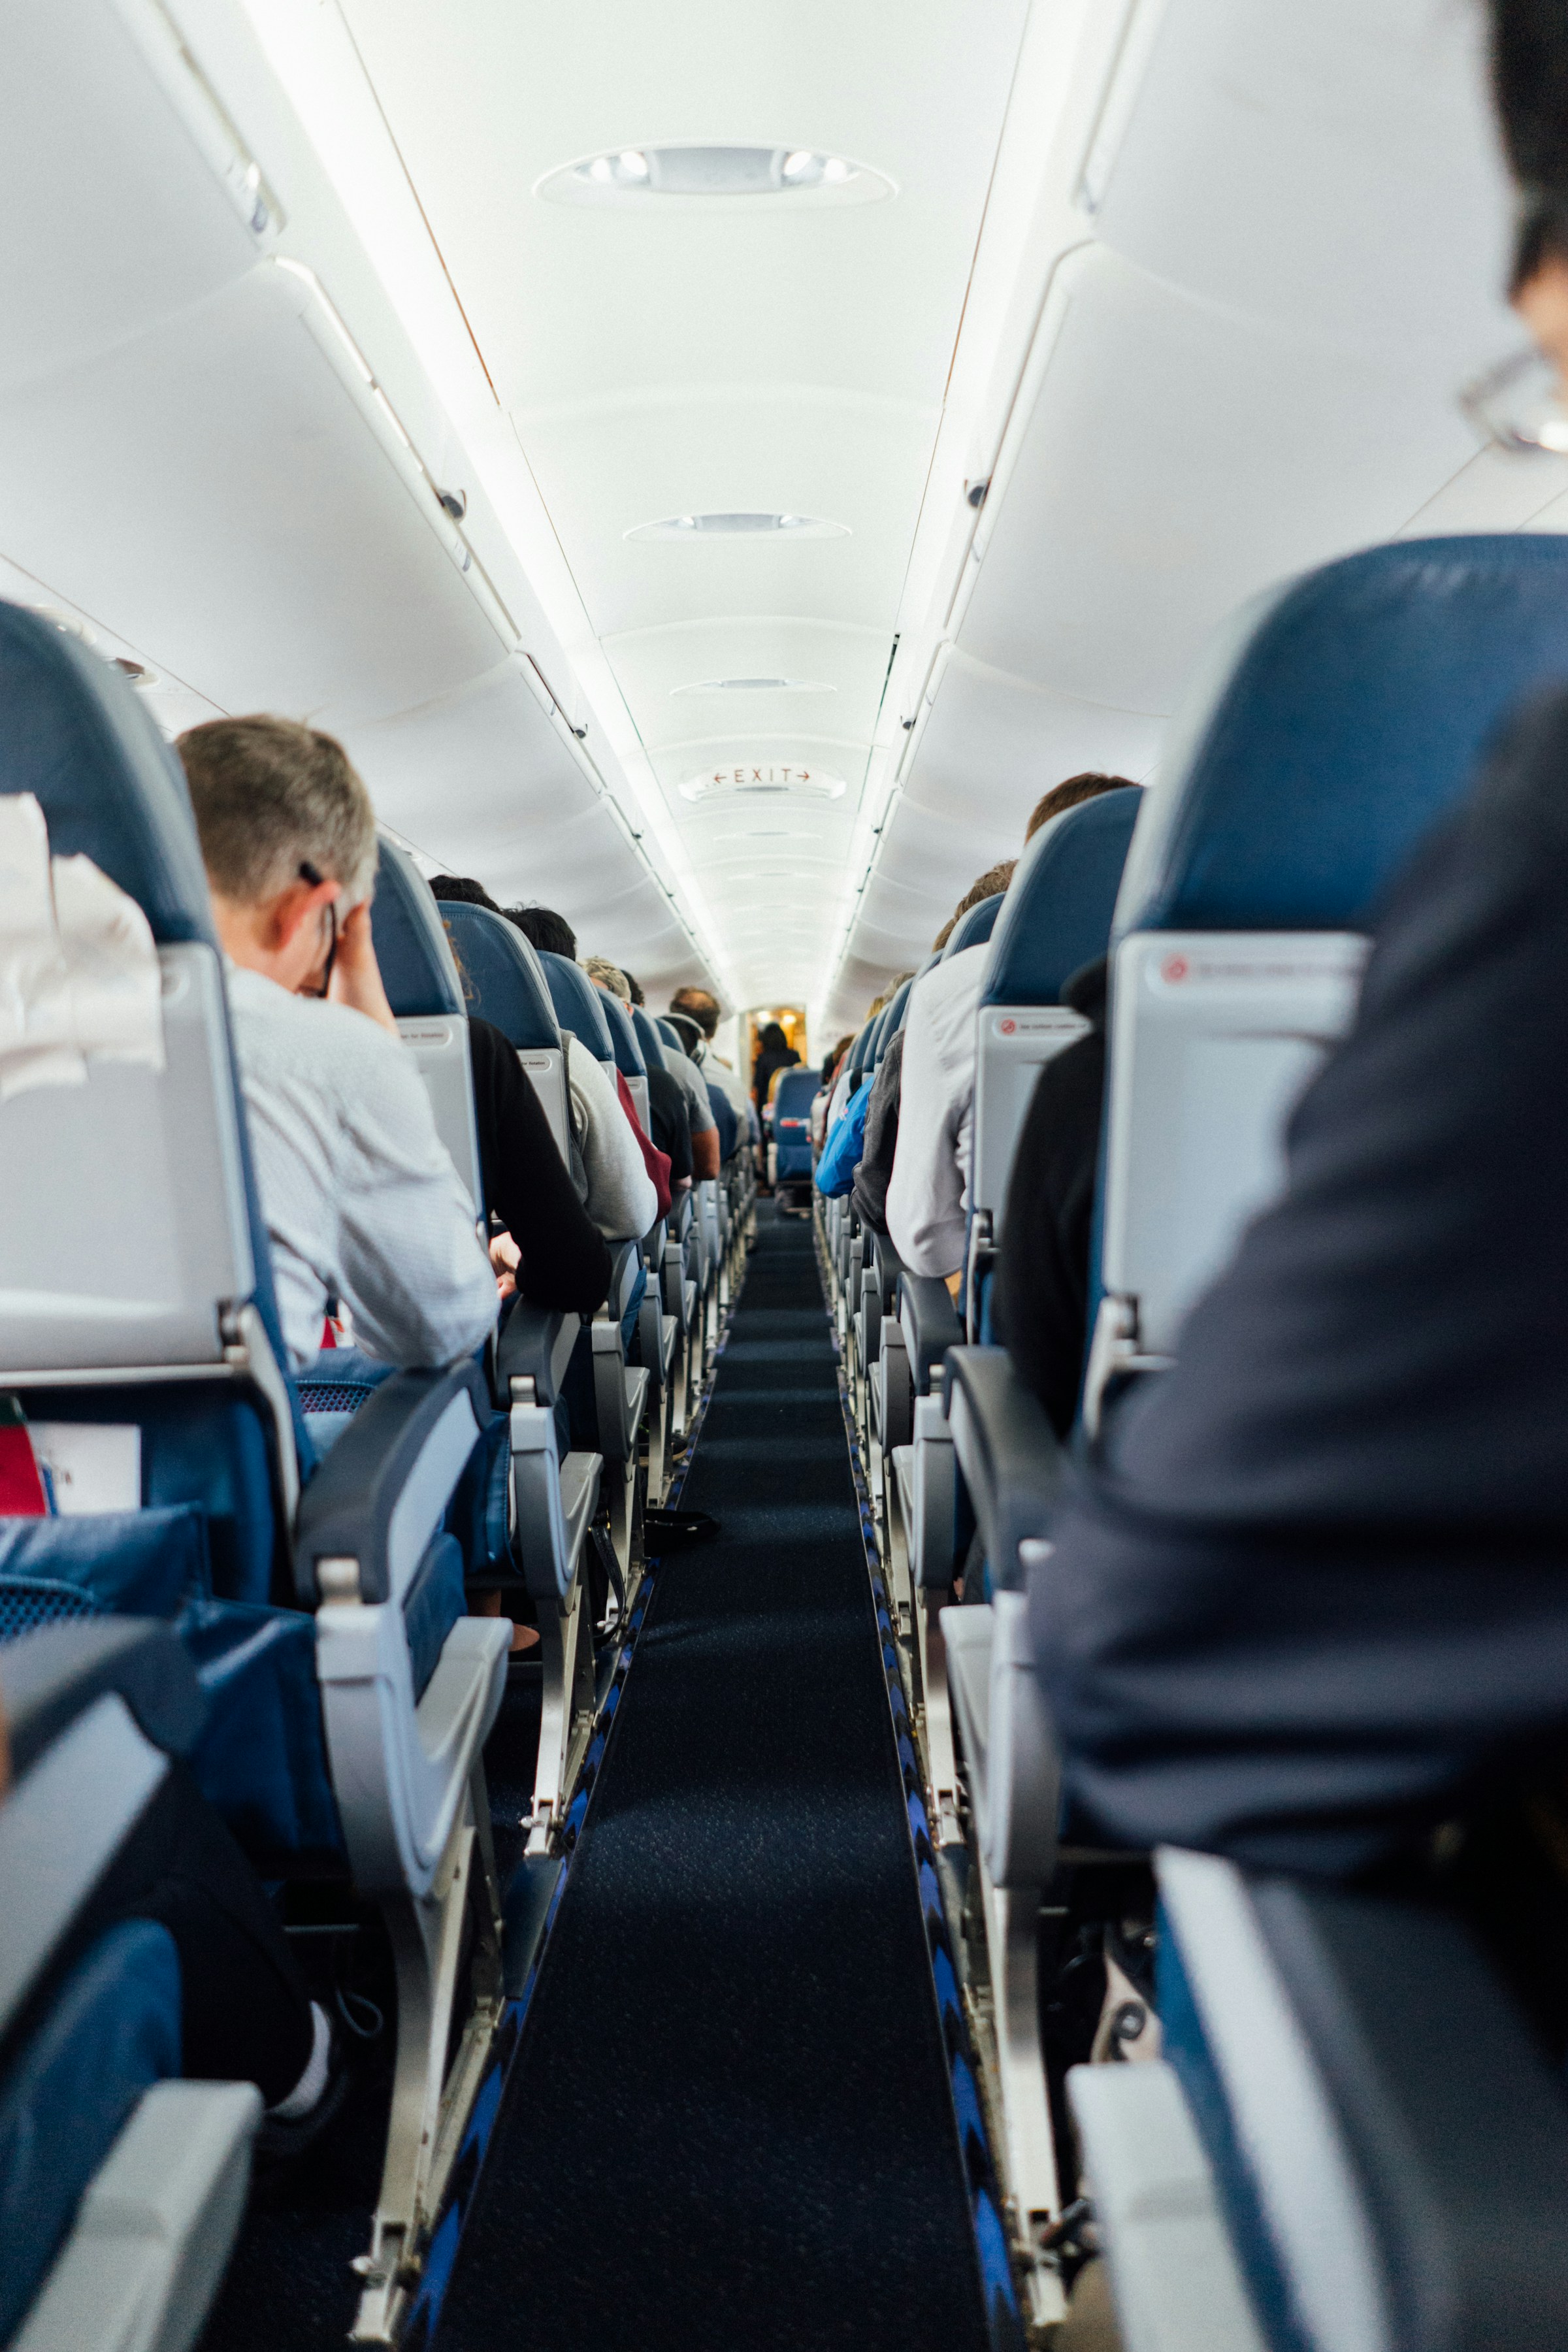 People sitting in a plane | Source: Unsplash